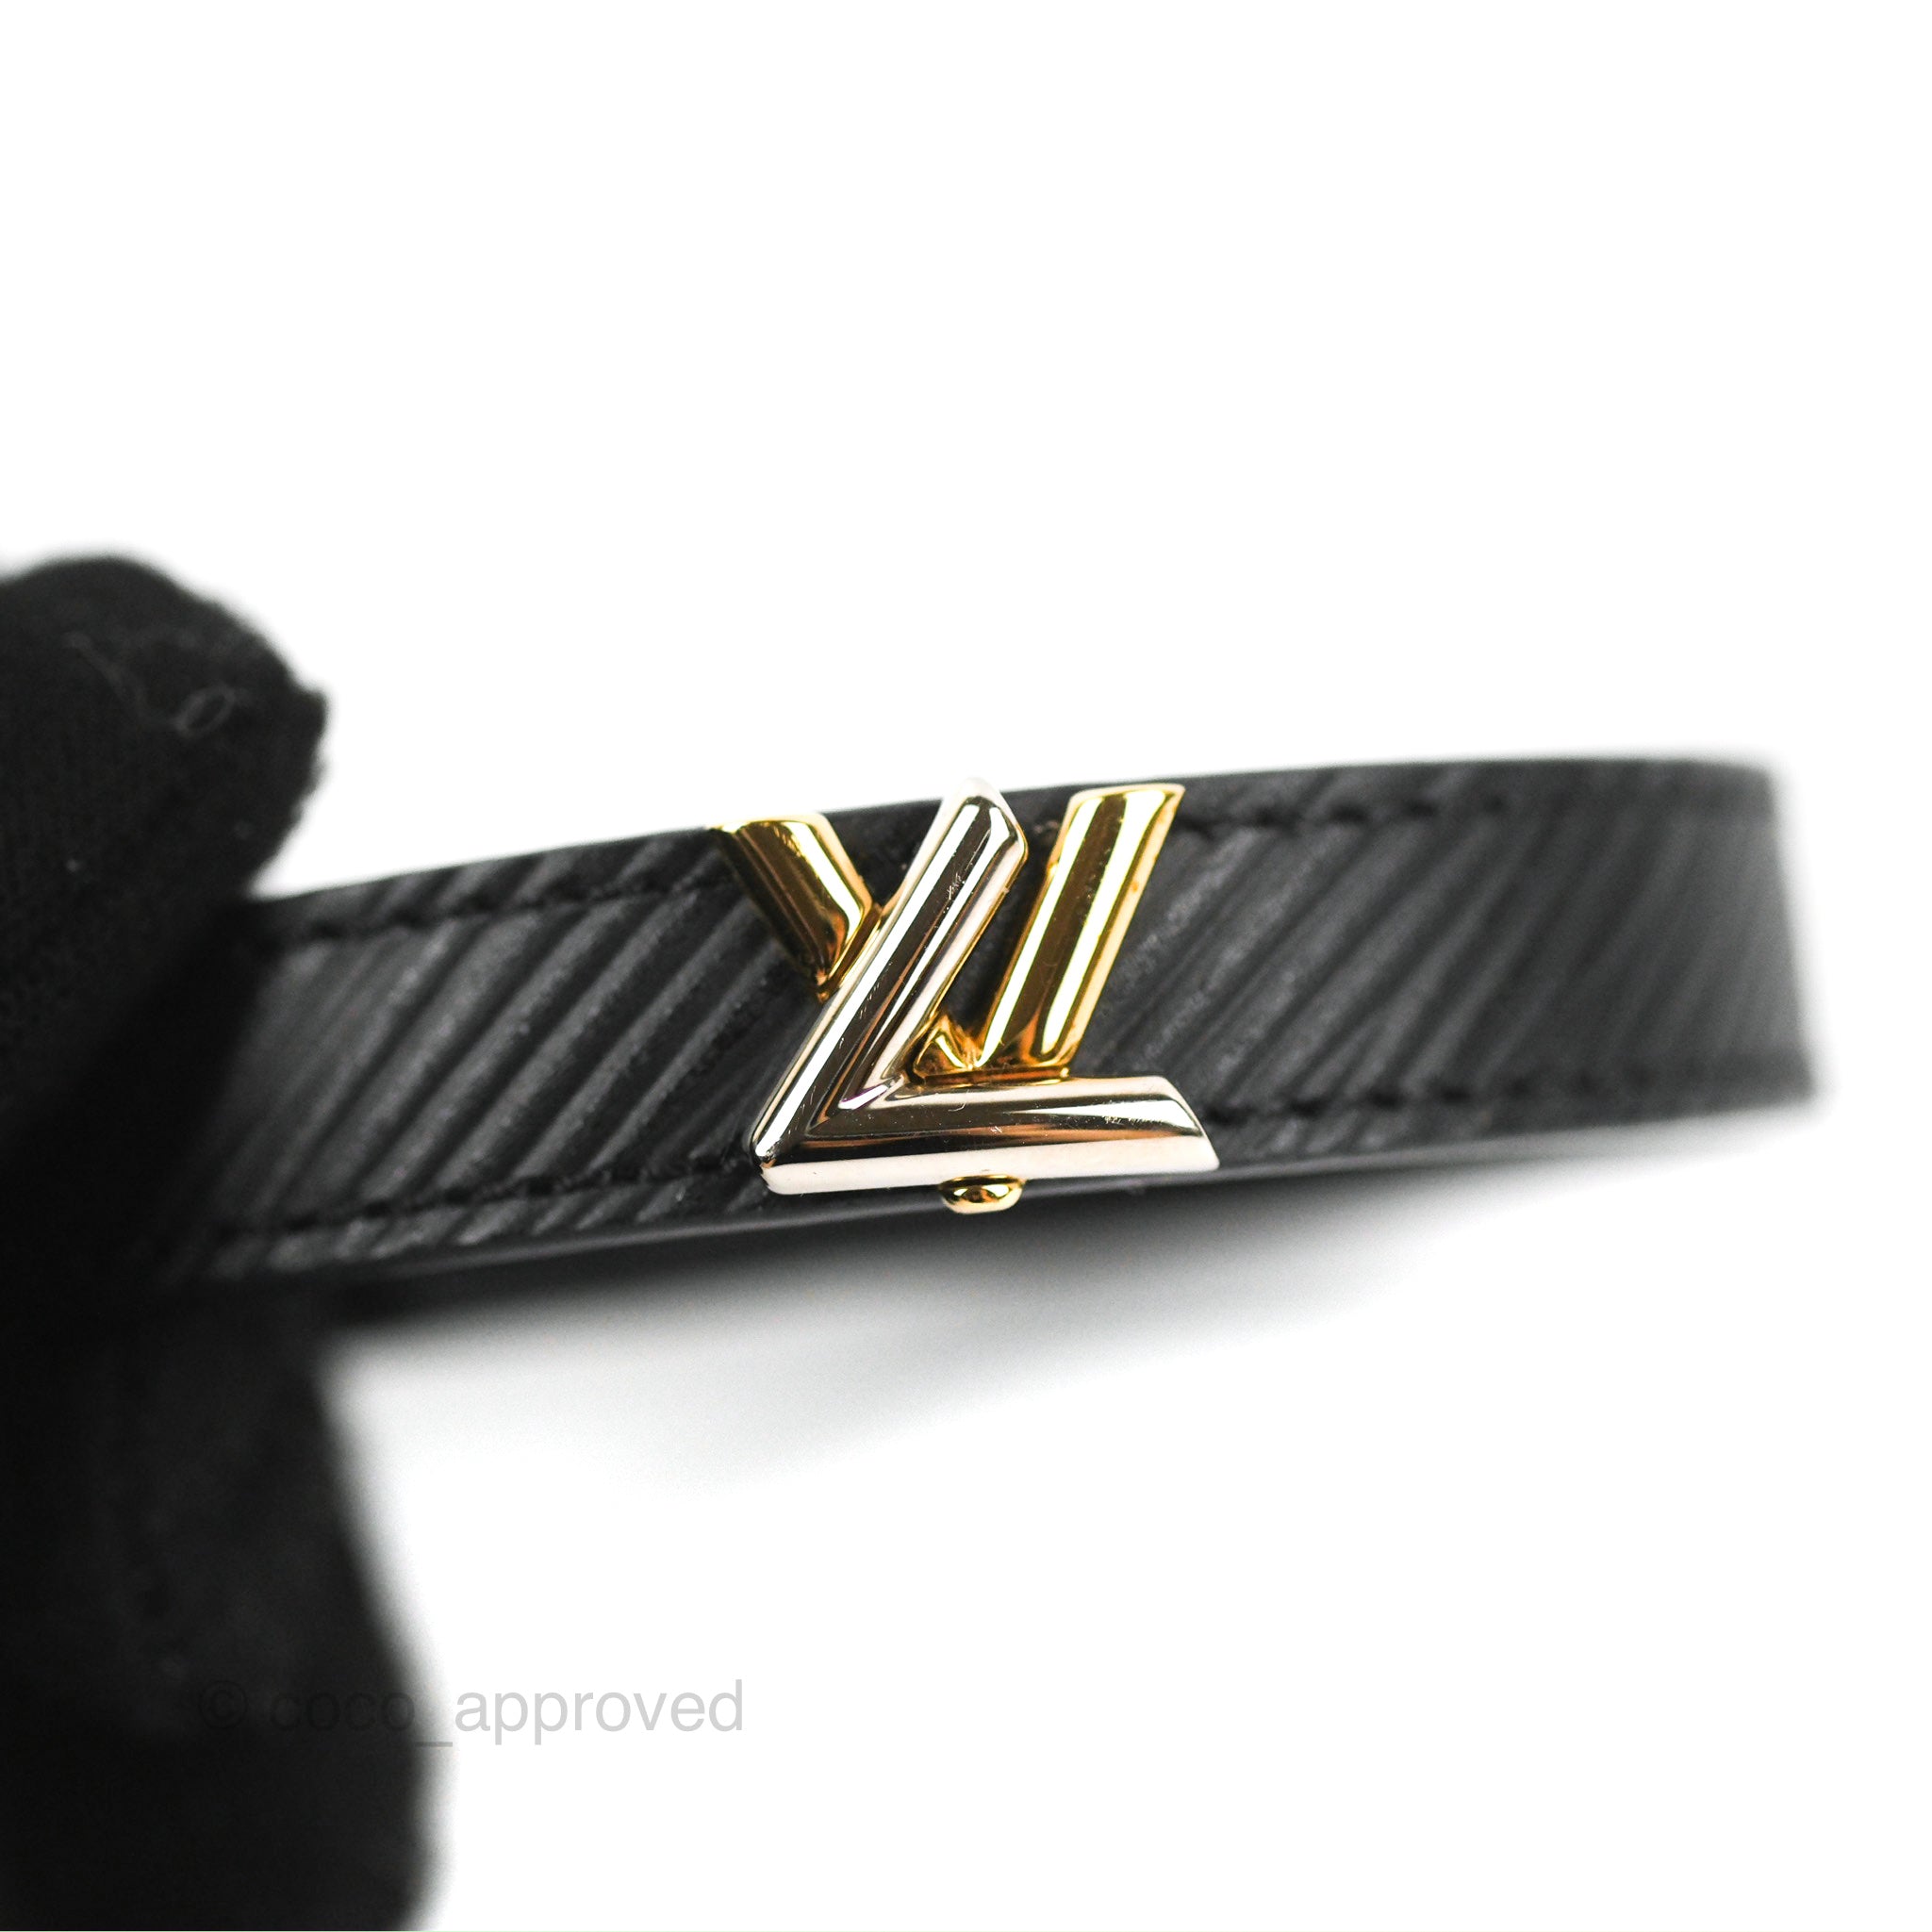 LOUIS VUITTON Bracelet LV Twist Epi Leather/Metal Black/Gold